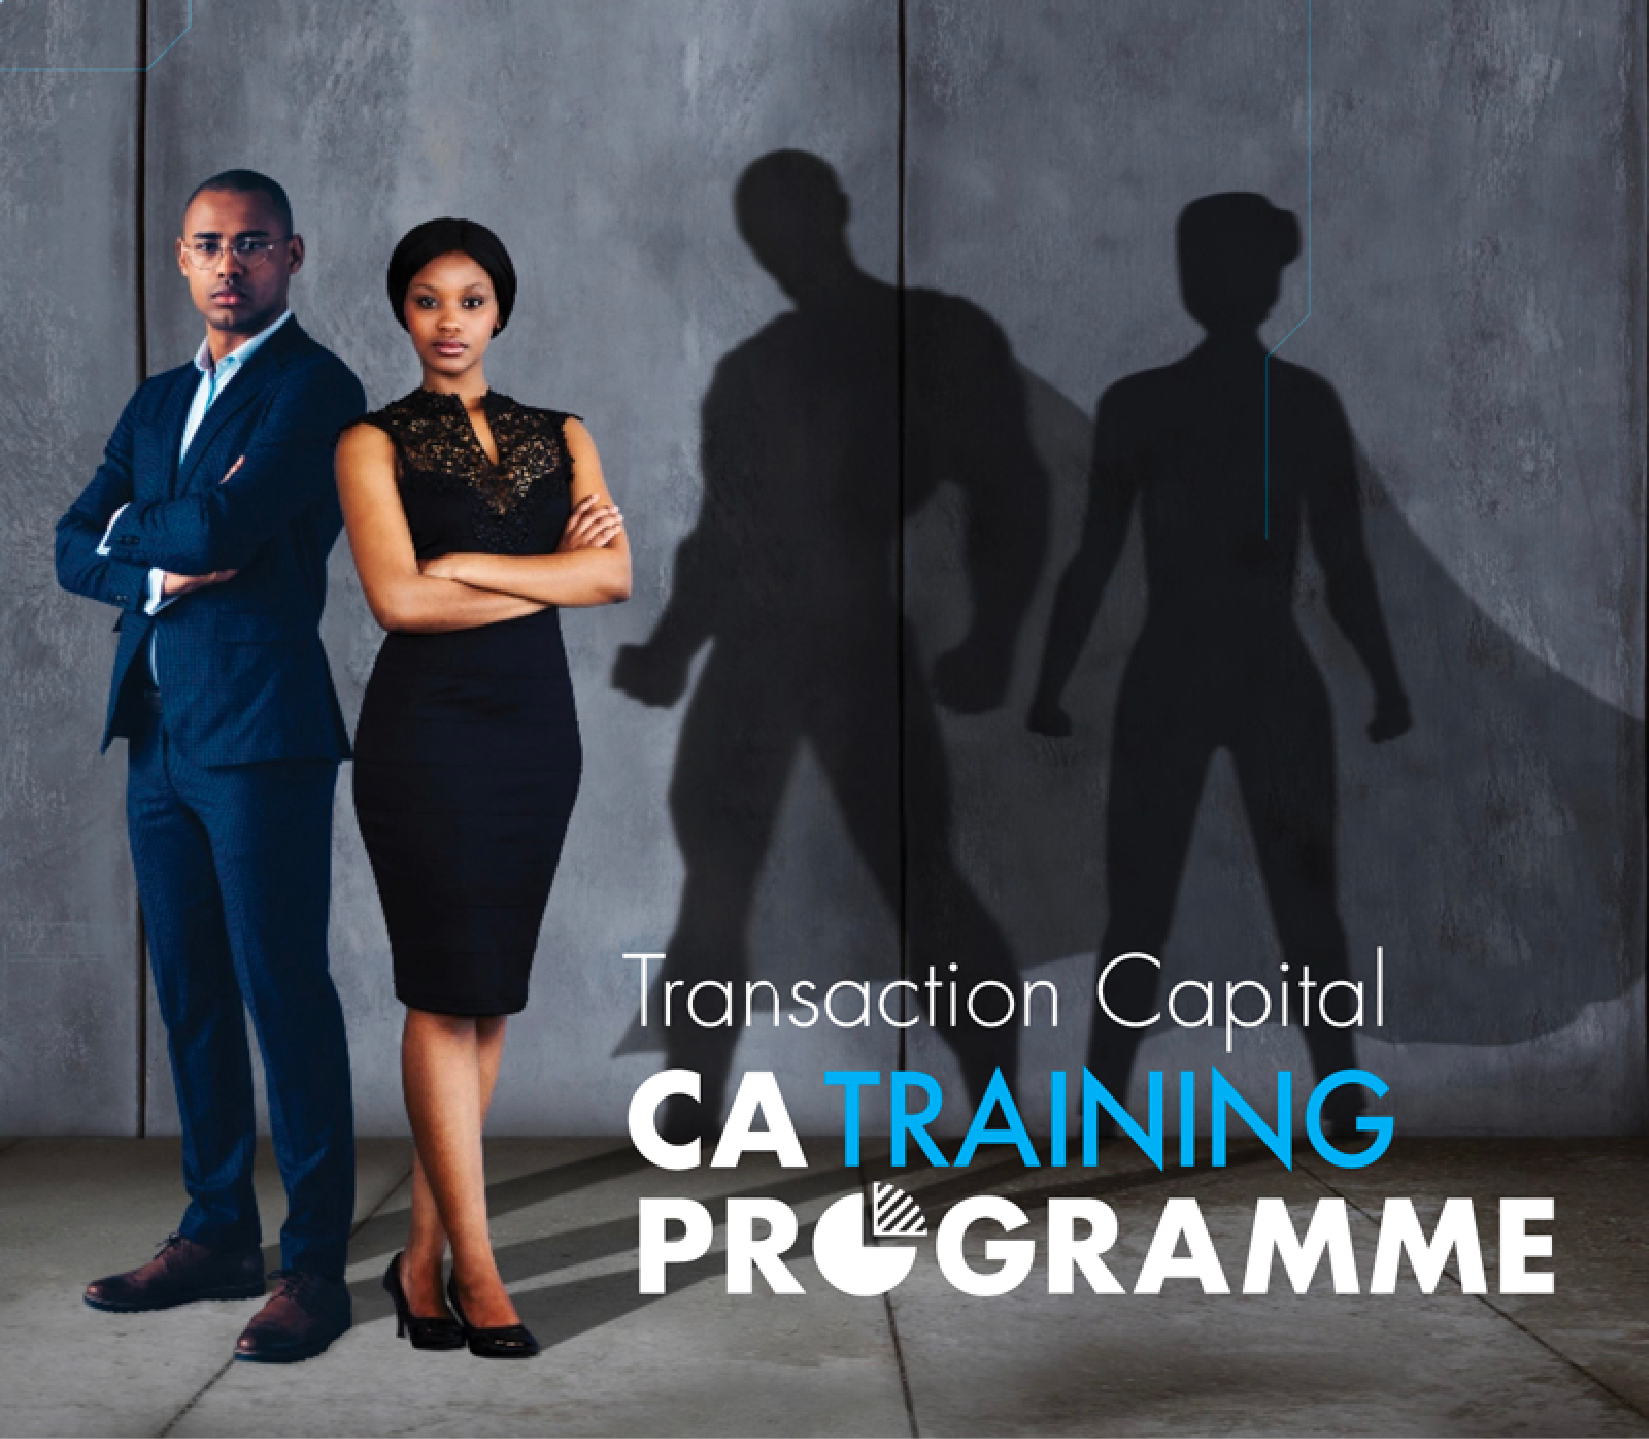 CA Training Programme | Transaction Capital